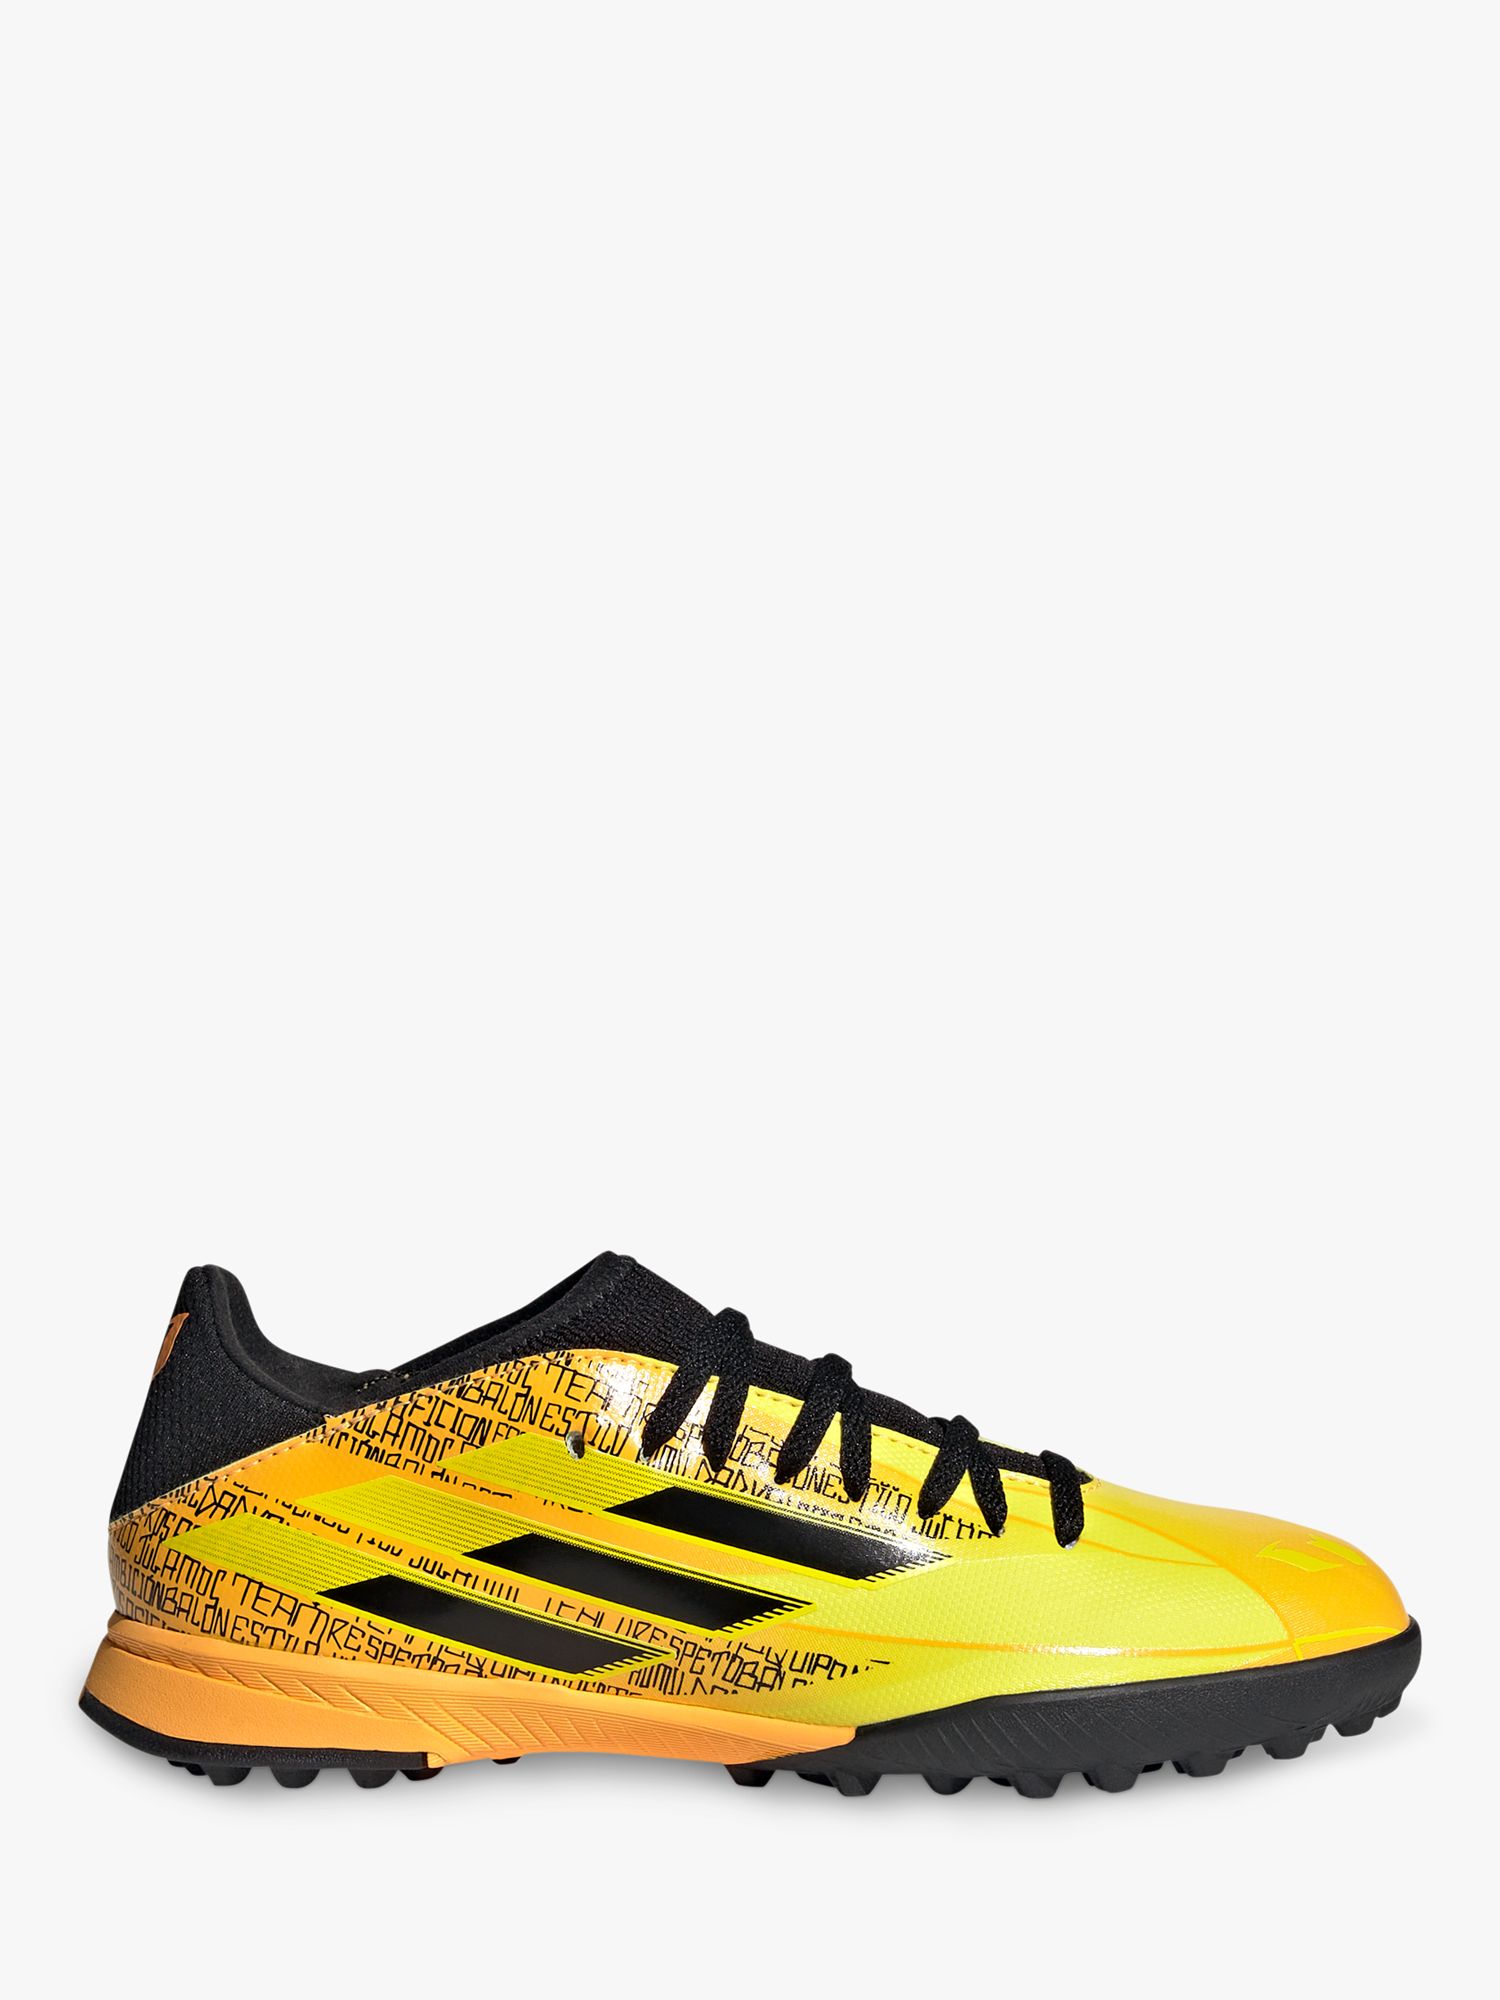 adidas Kids' X Speedflow Messi.3 Artificial Turf Boots, Black/Bright Yellow, 10